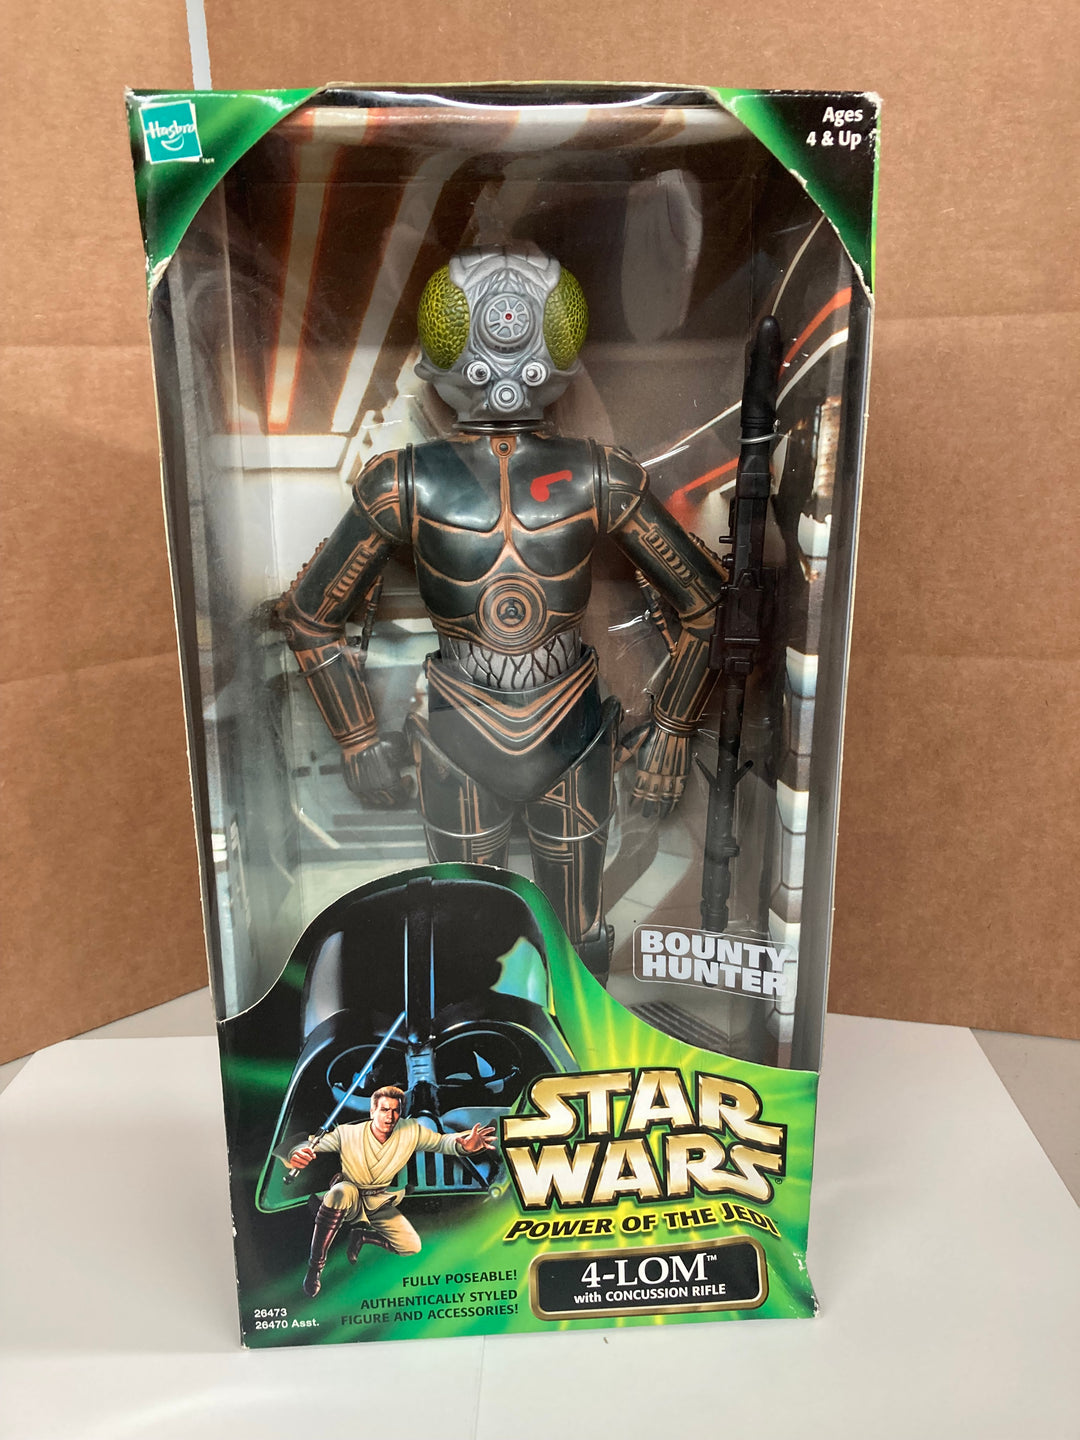 Star Wars Power of the Jedi 4-LOM 12 inch figure MIB Hasbro 2000